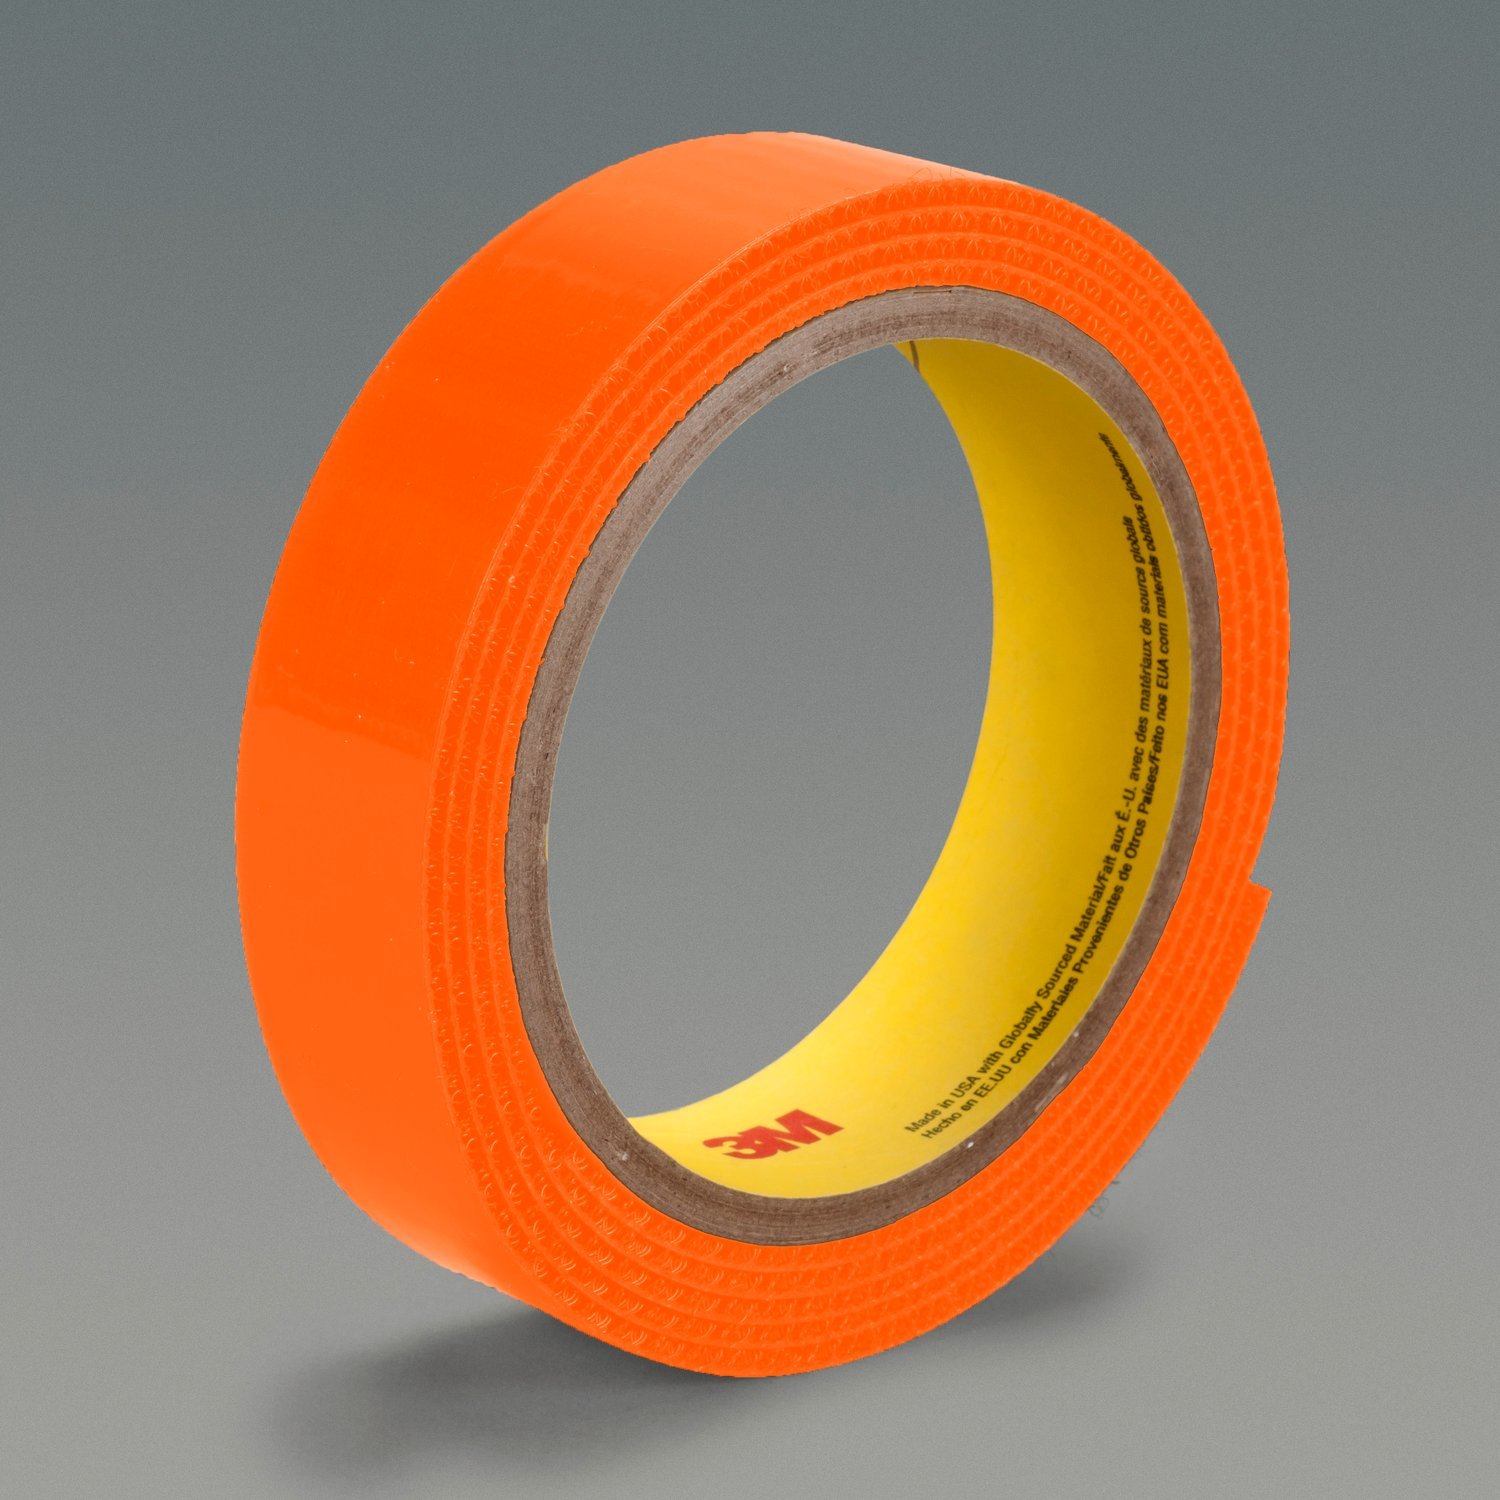 7010295810 - 3M Loop Fastener SJ3401, Orange, 1 in x 50 yd, 12 rolls per case